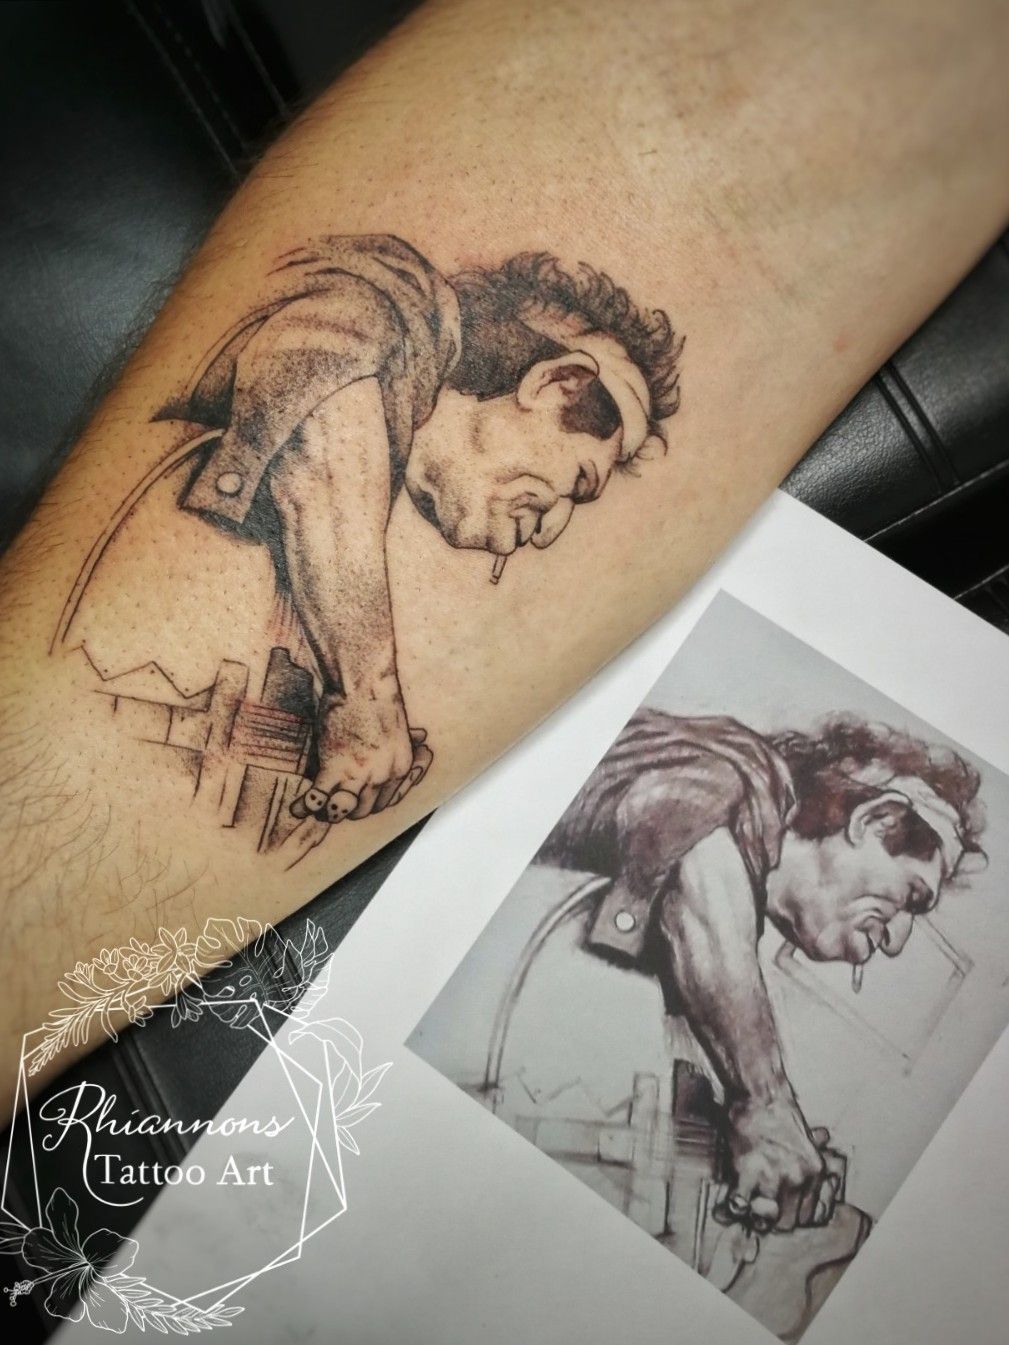 Tamas made this Keith Richards tattoo  Underworld Tattoo  Facebook